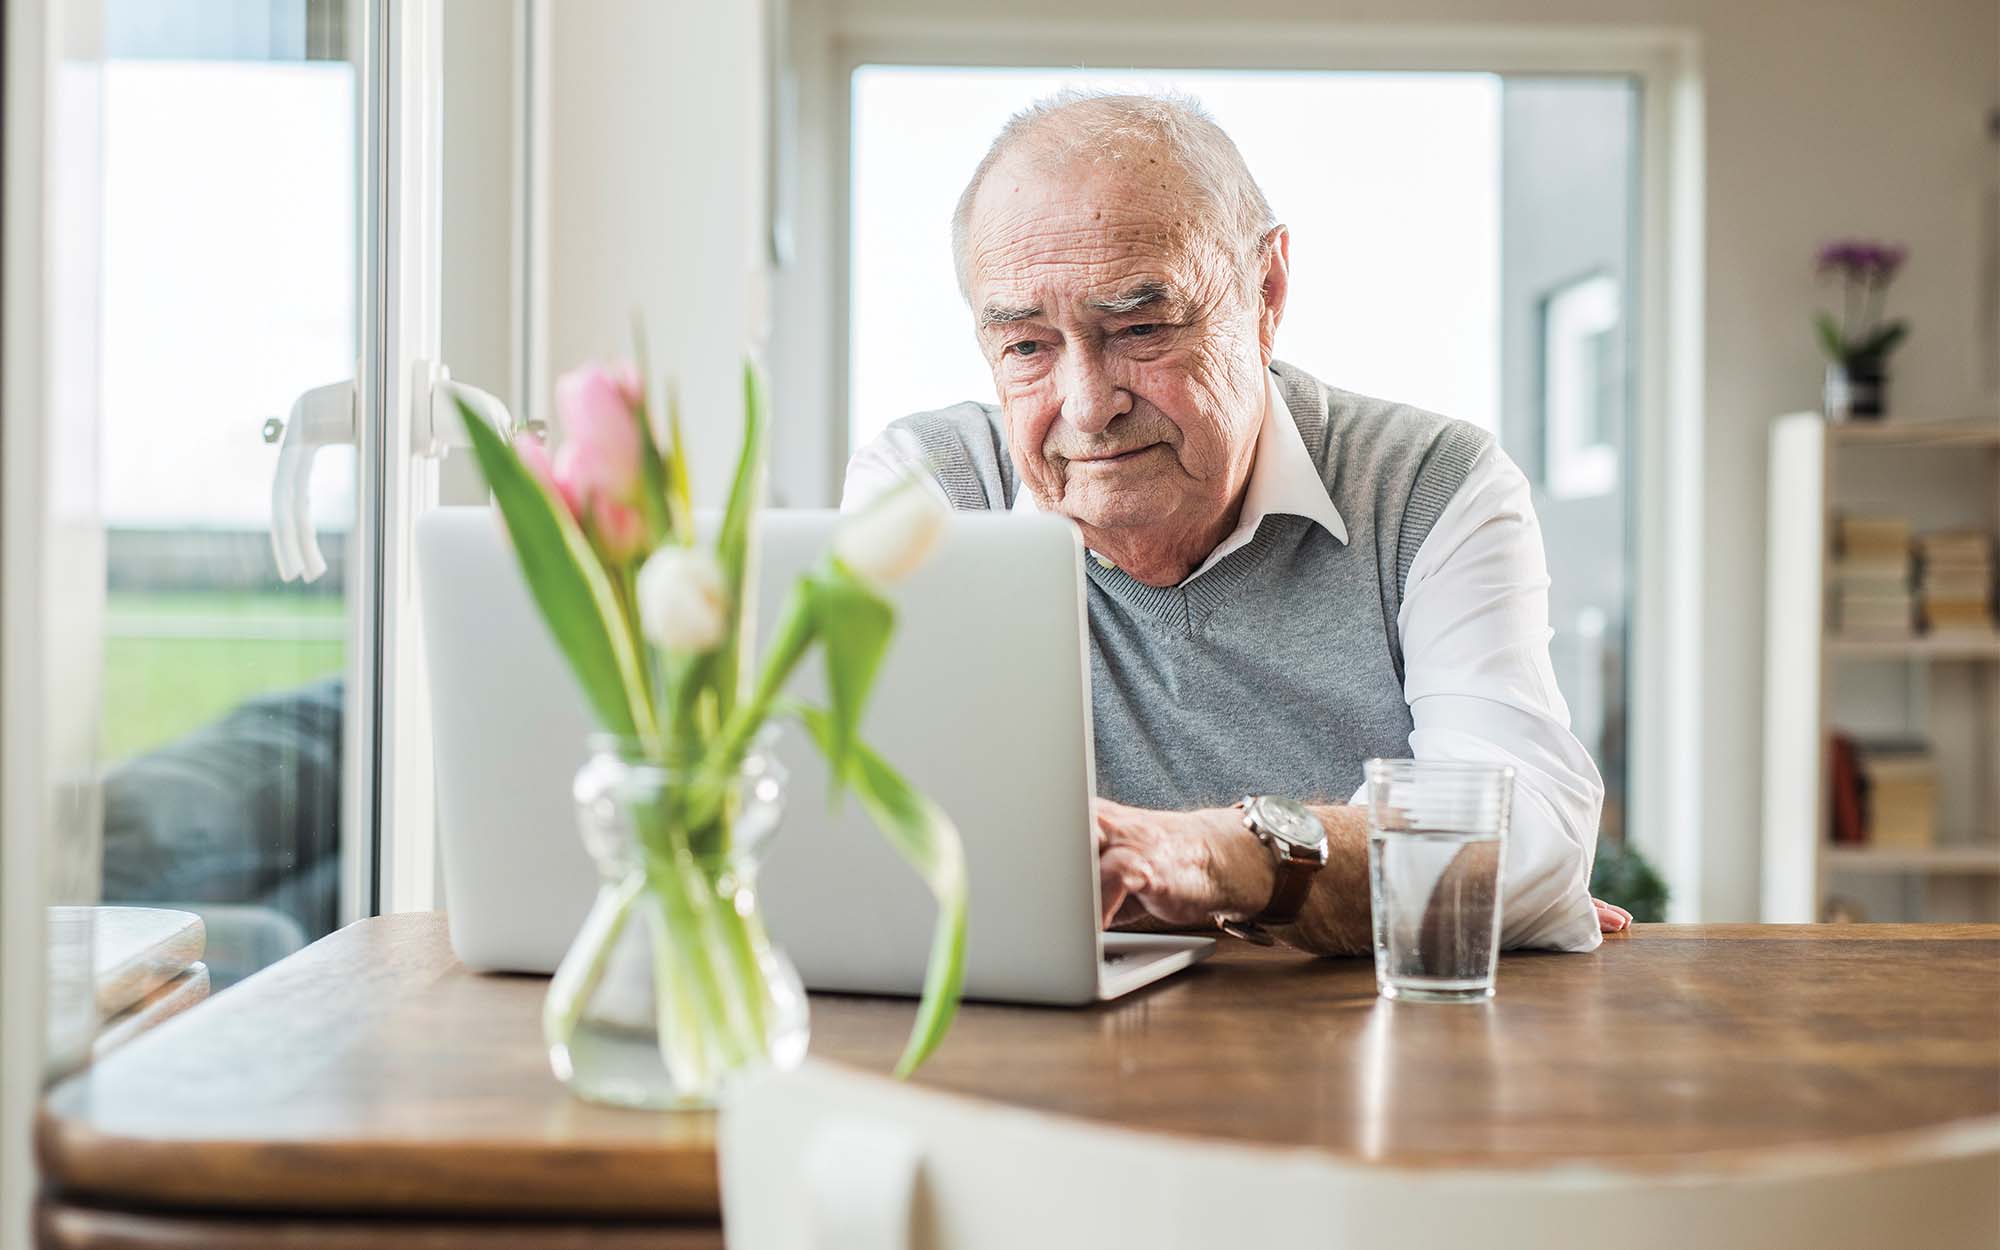 Senior citizen working on laptop